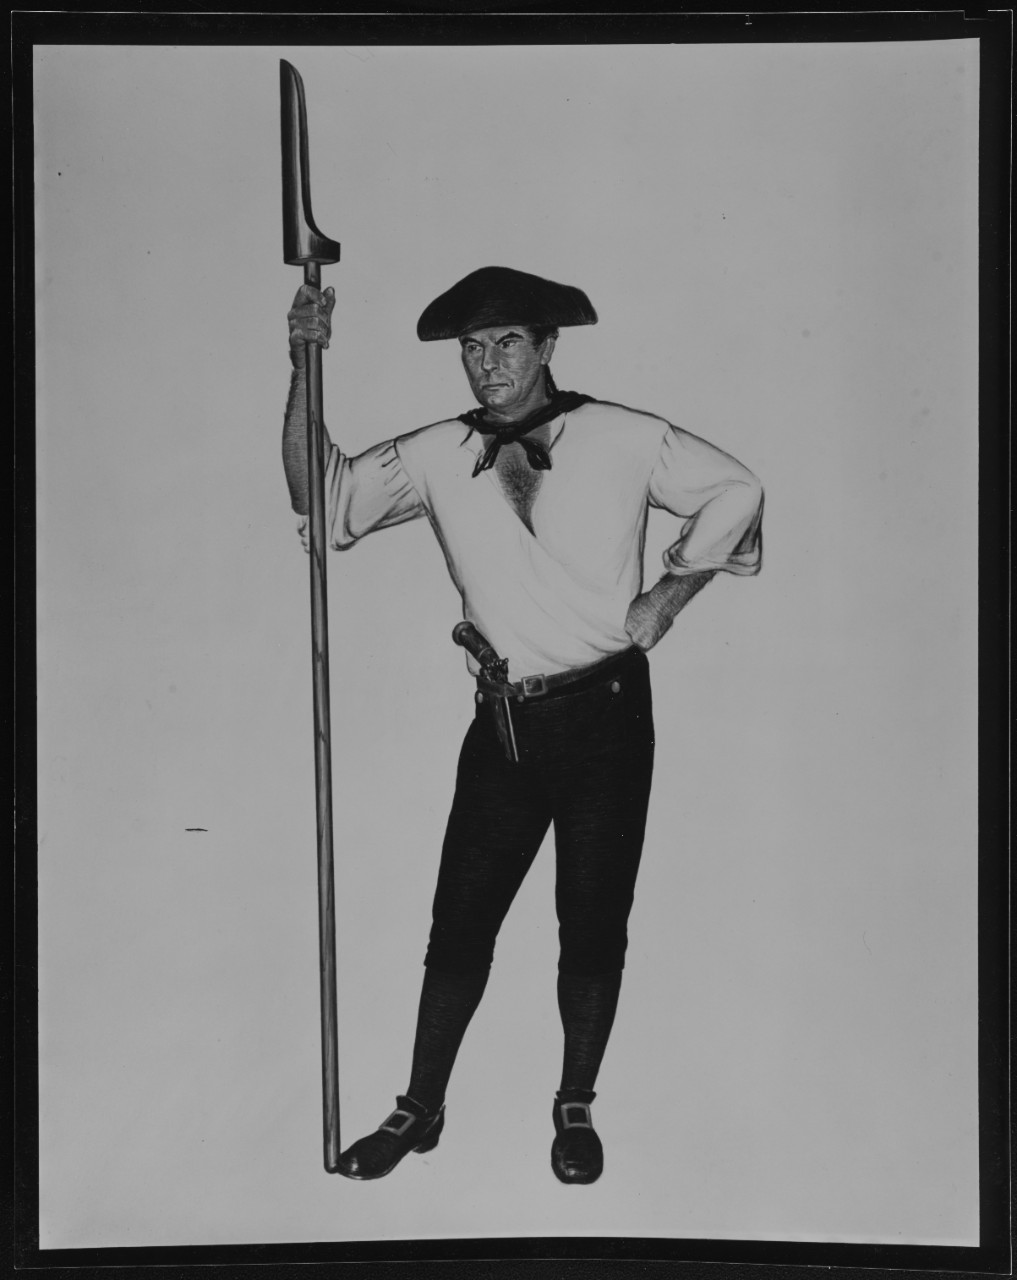 Seaman's Uniform, 1790-1810